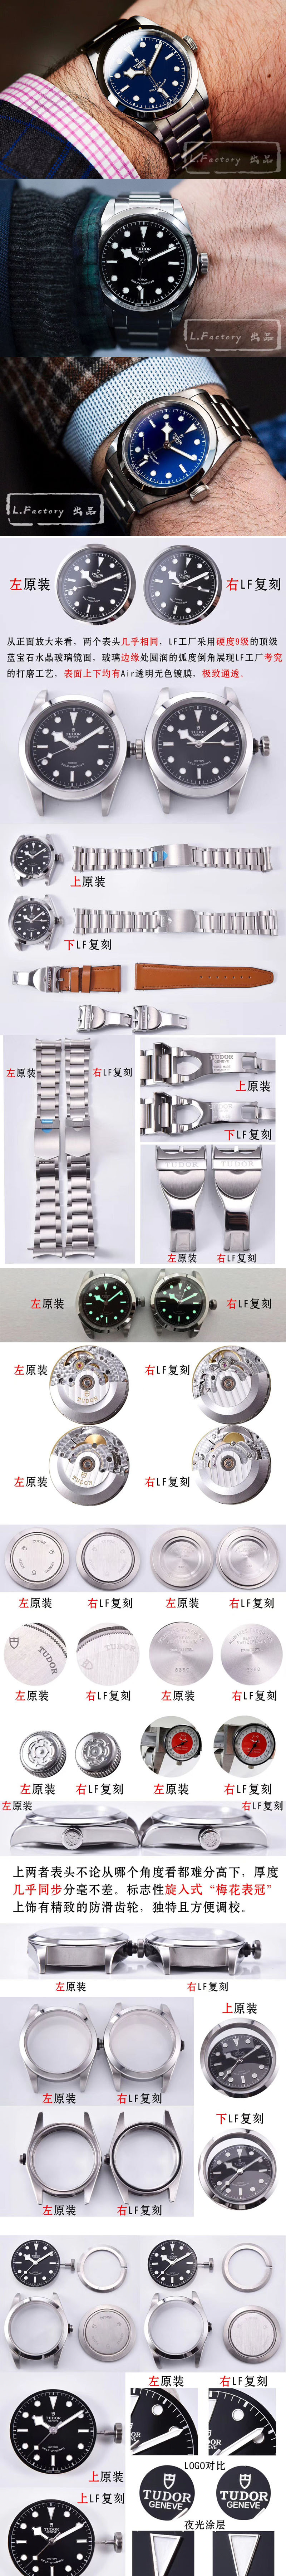 Replica Tudor  Watches